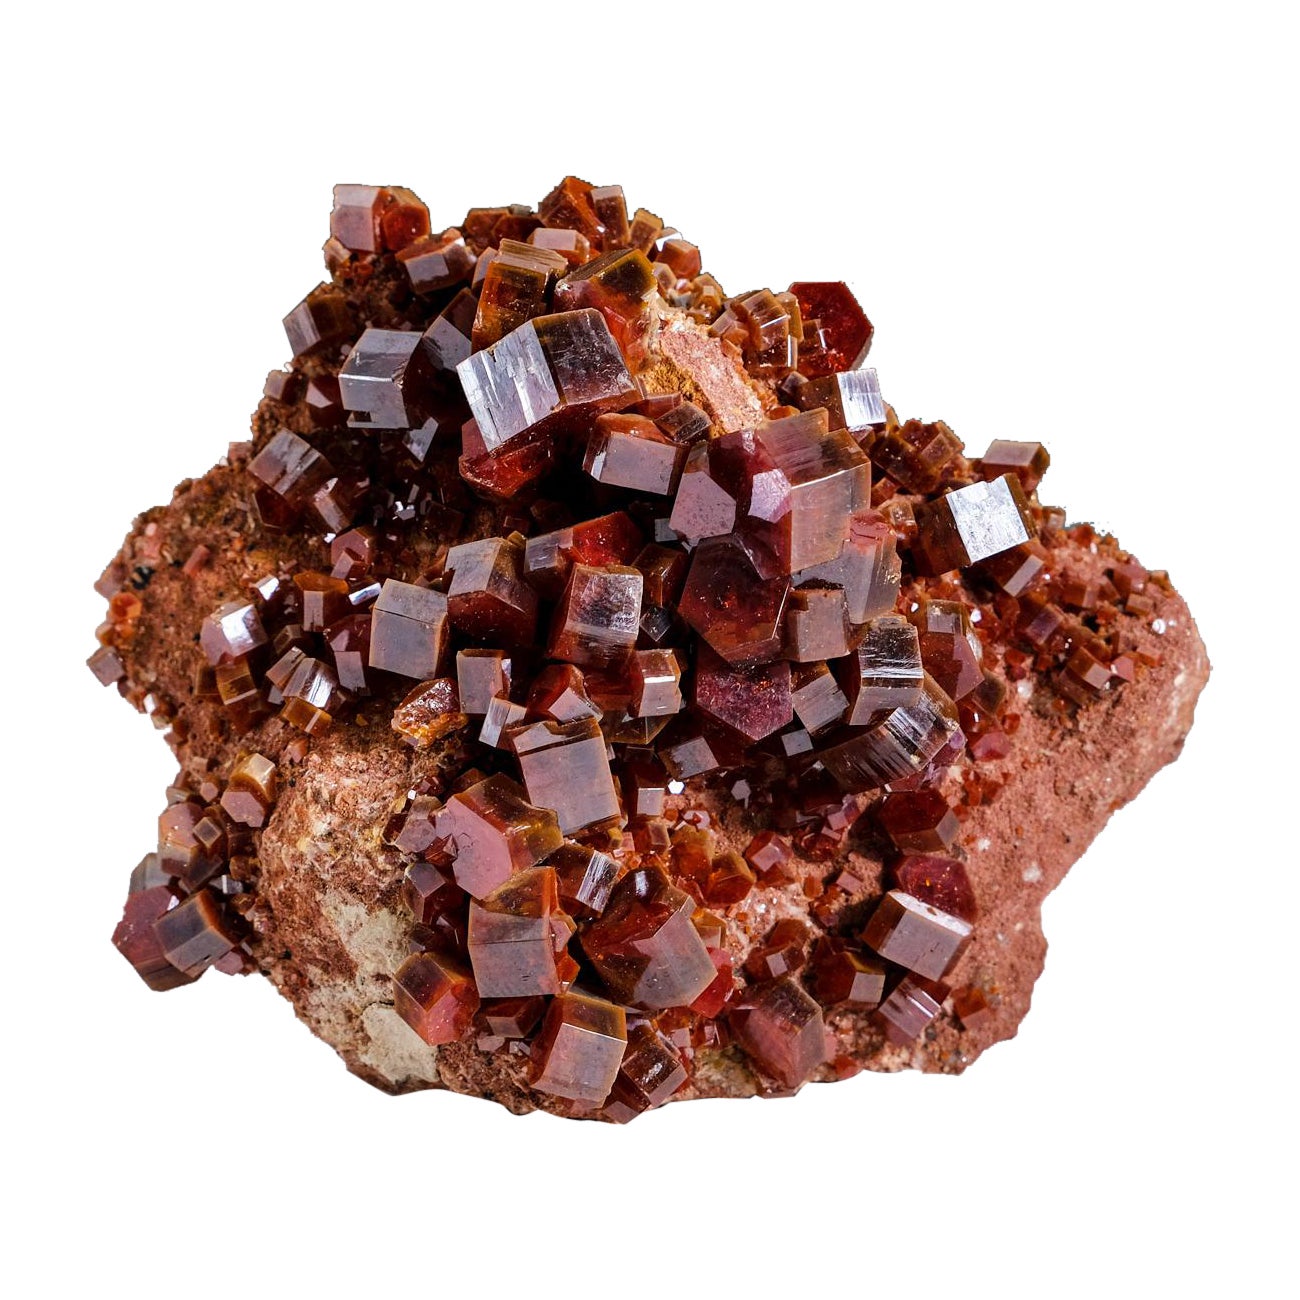 Genuine Vanadinite Crystal Cluster on Matrix from Morocco (183.4 grams) For Sale